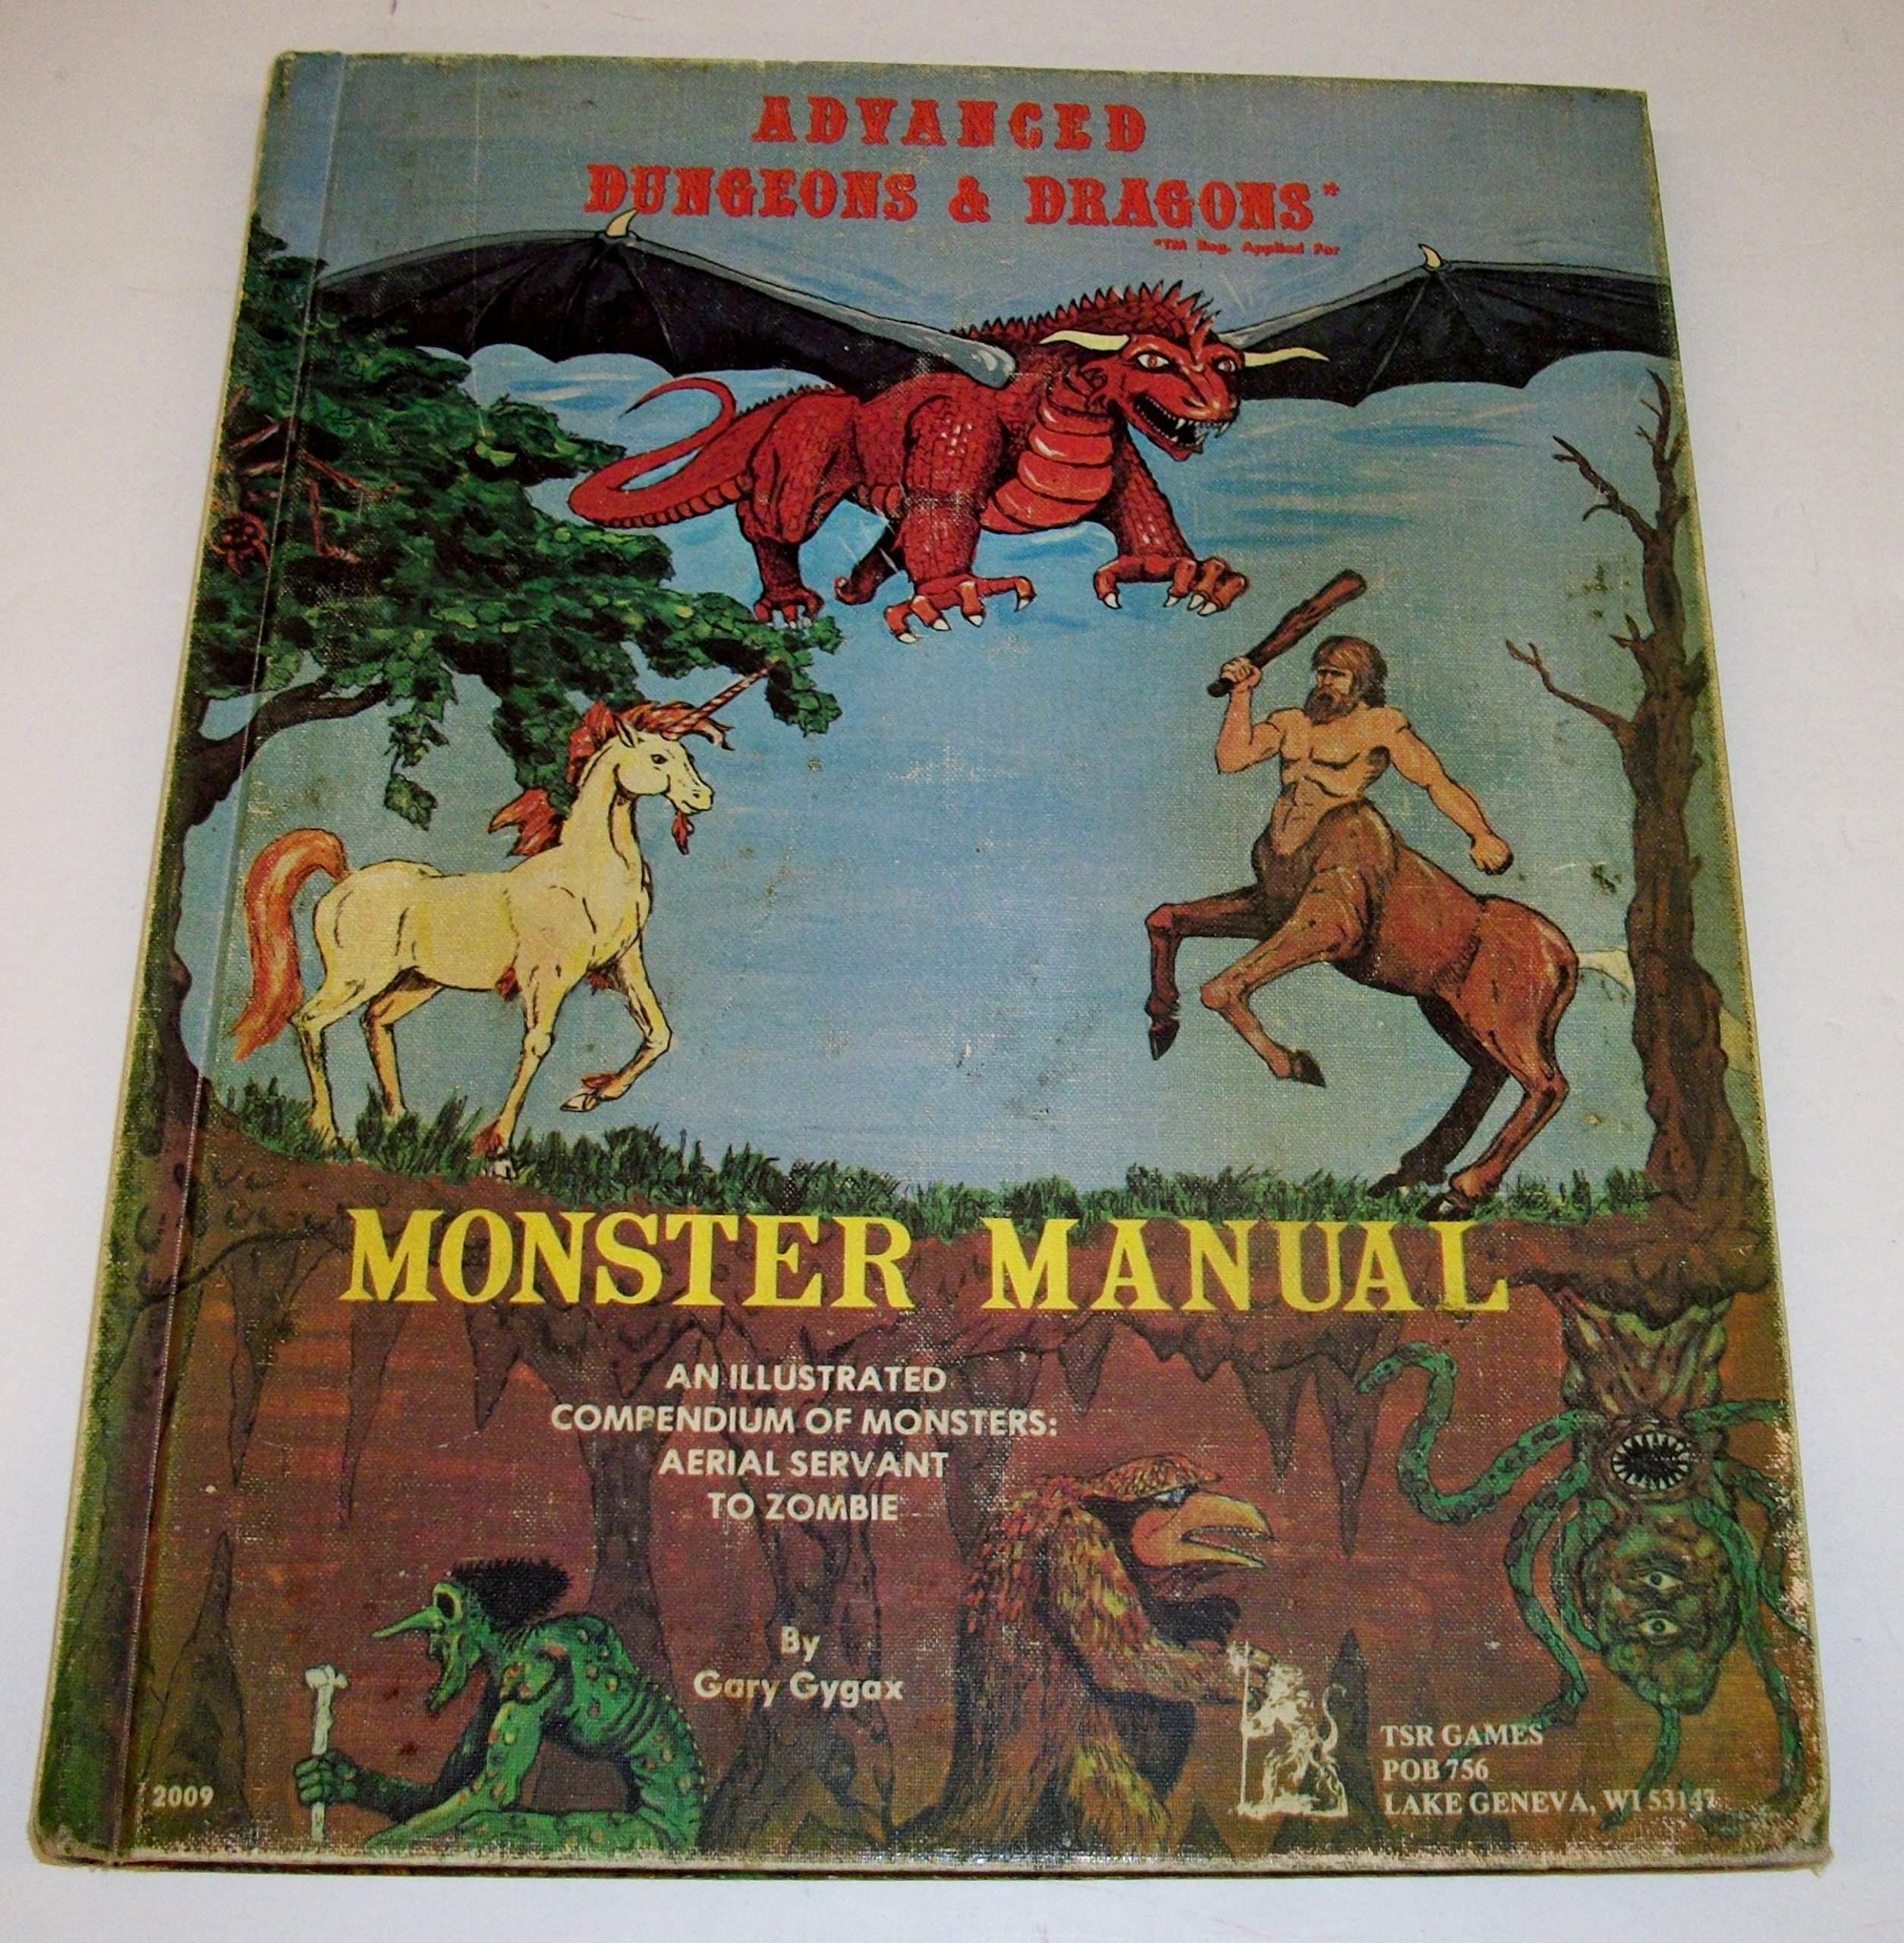 Add Monster Manual 1977